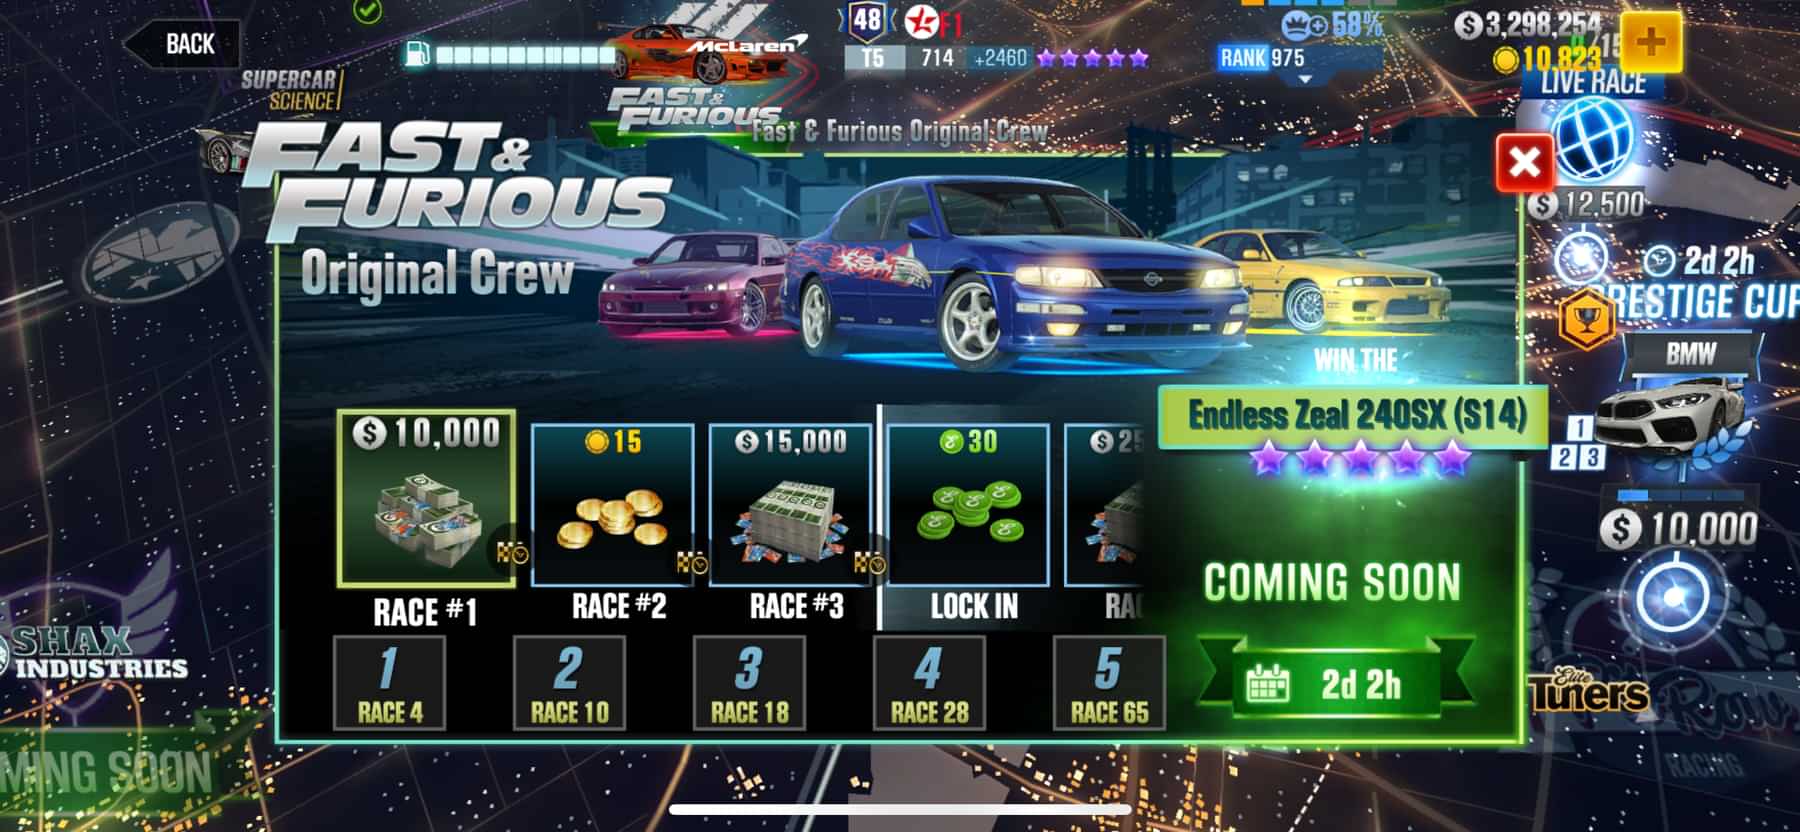 Fast & Furious Original Crew CSR2